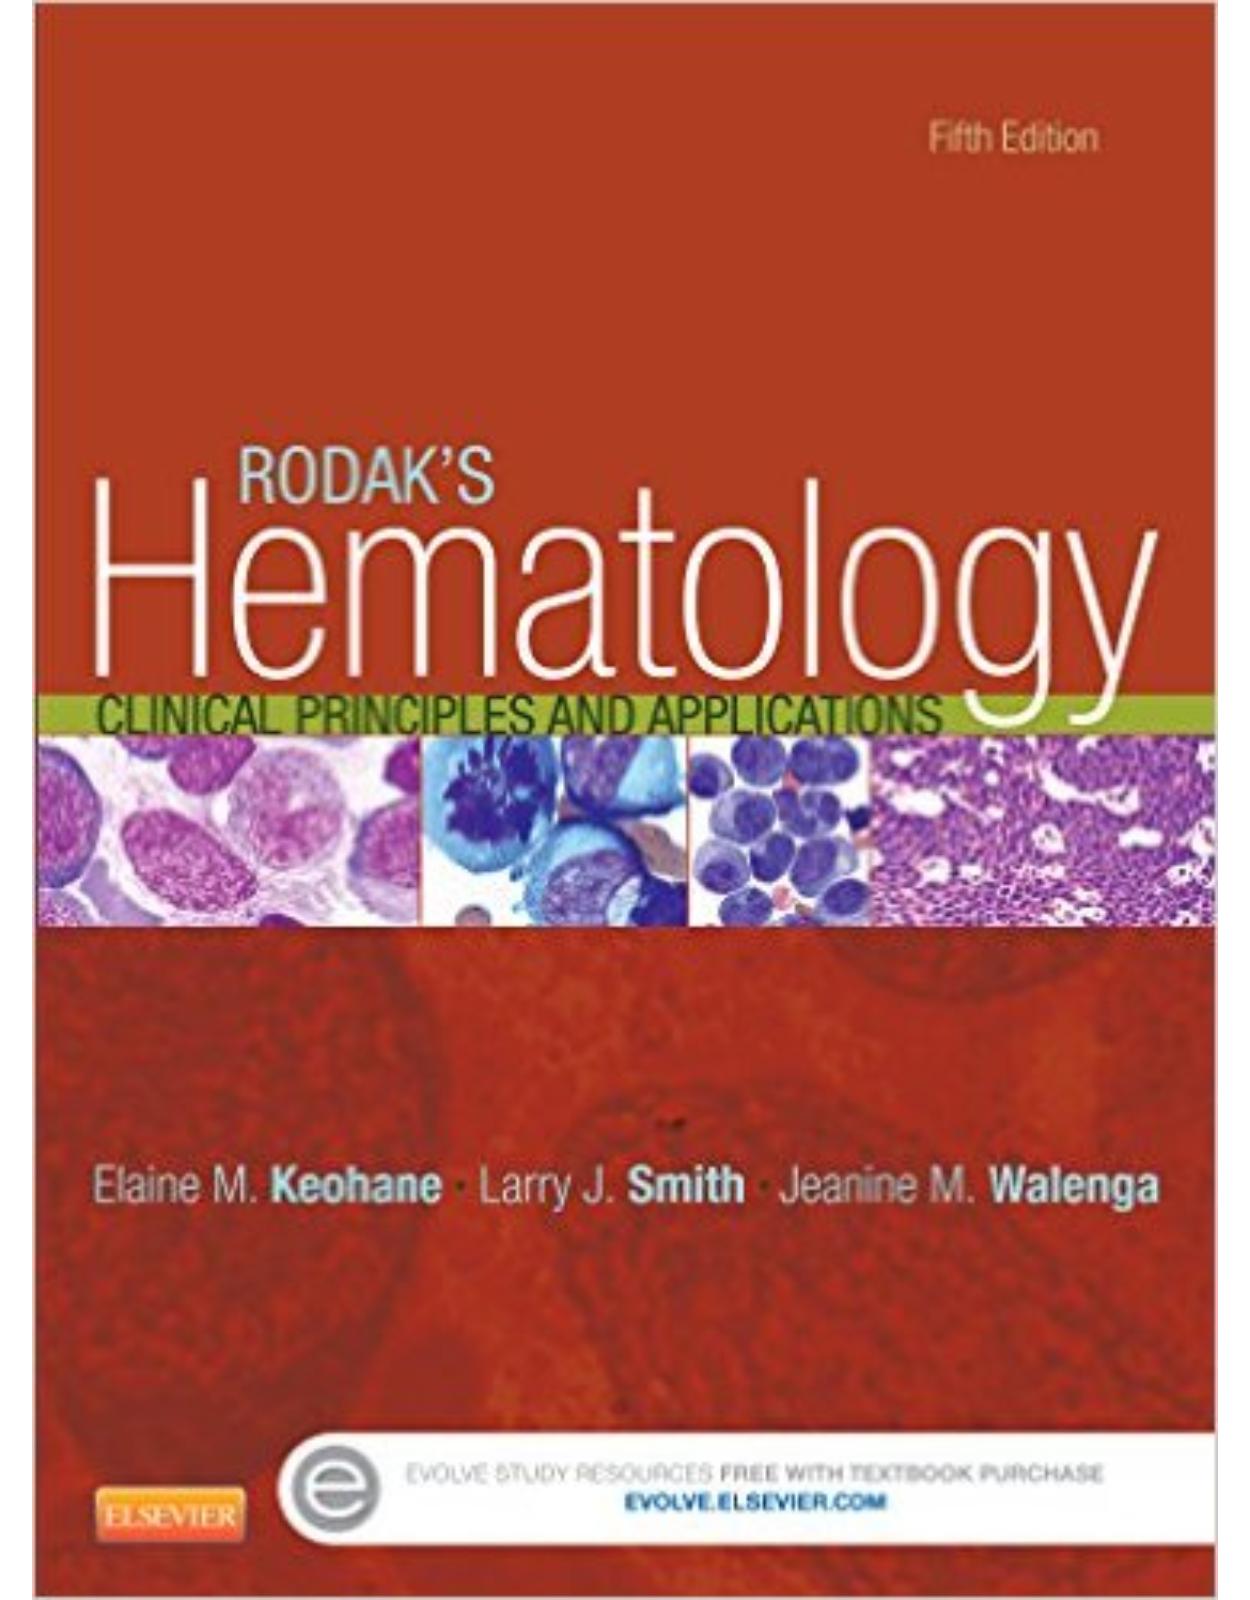 Rodak's Hematology: Clinical Principles and Applications, 5e